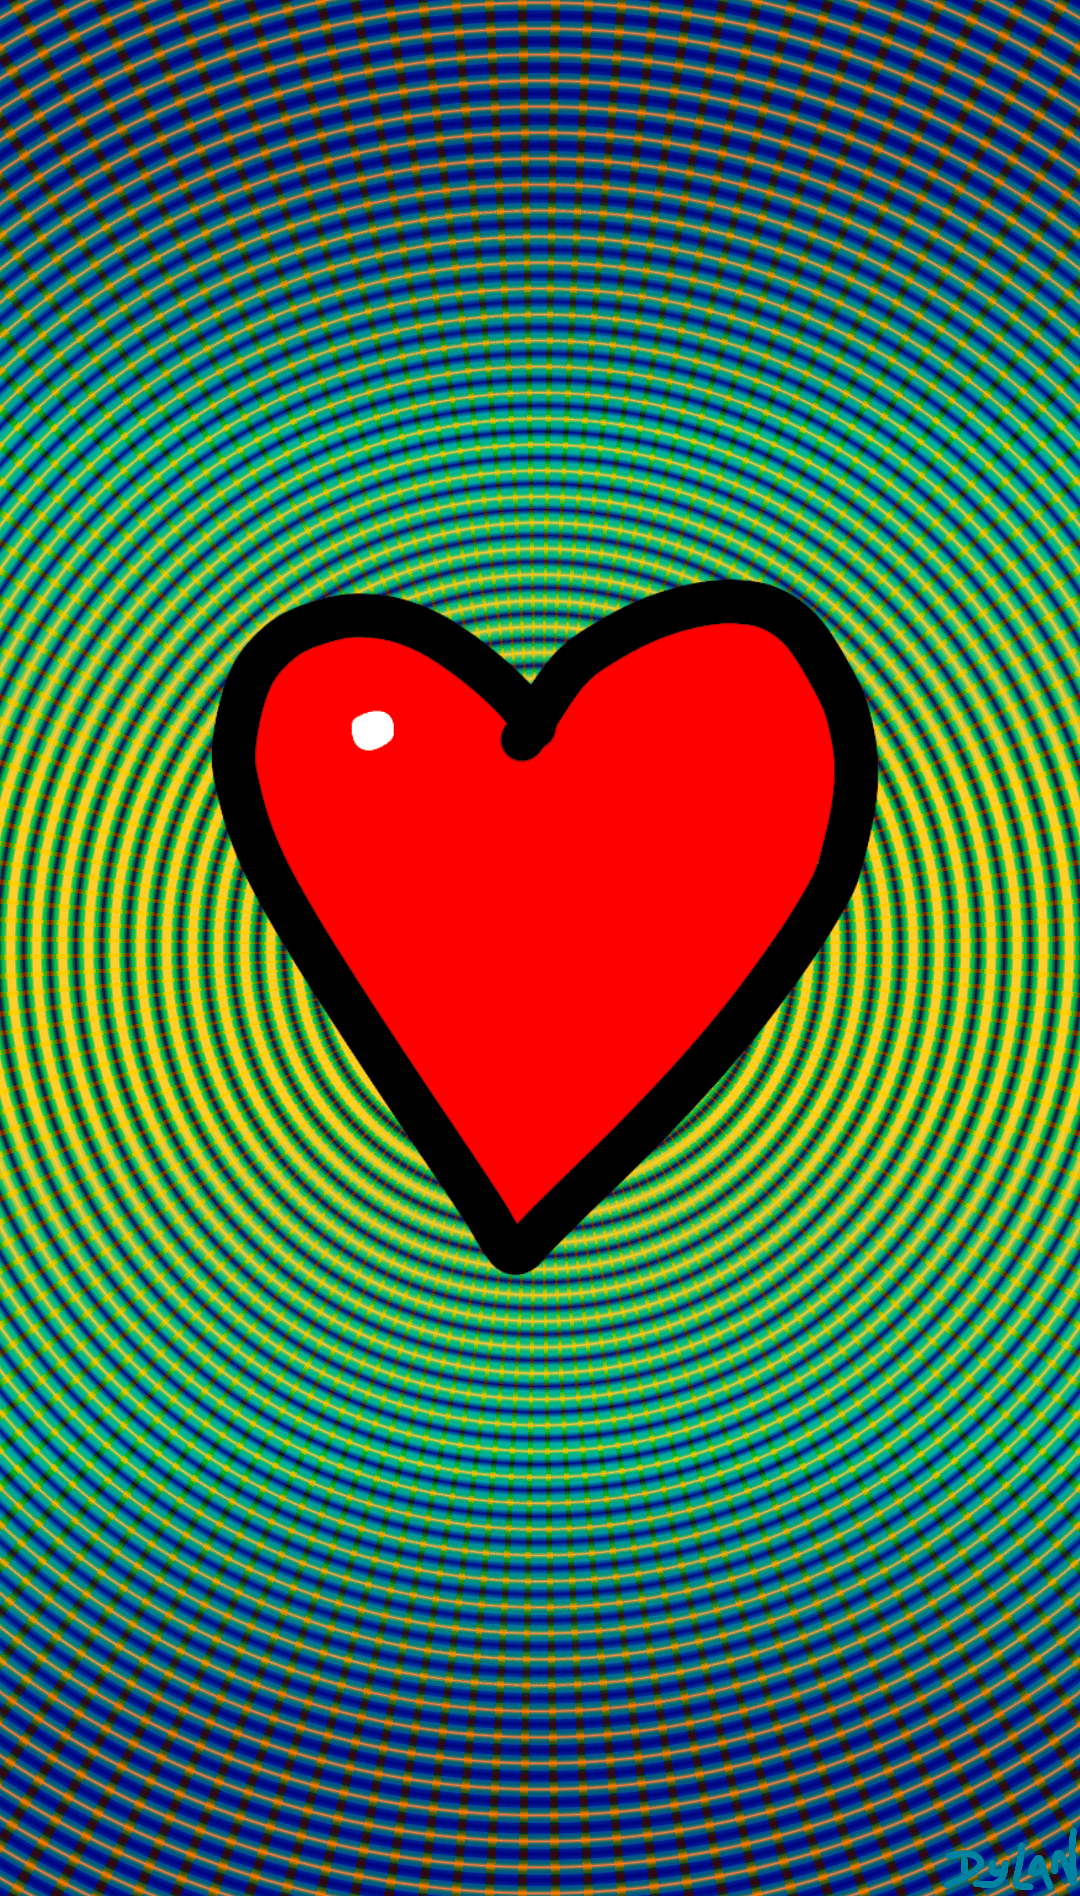 Heart #003